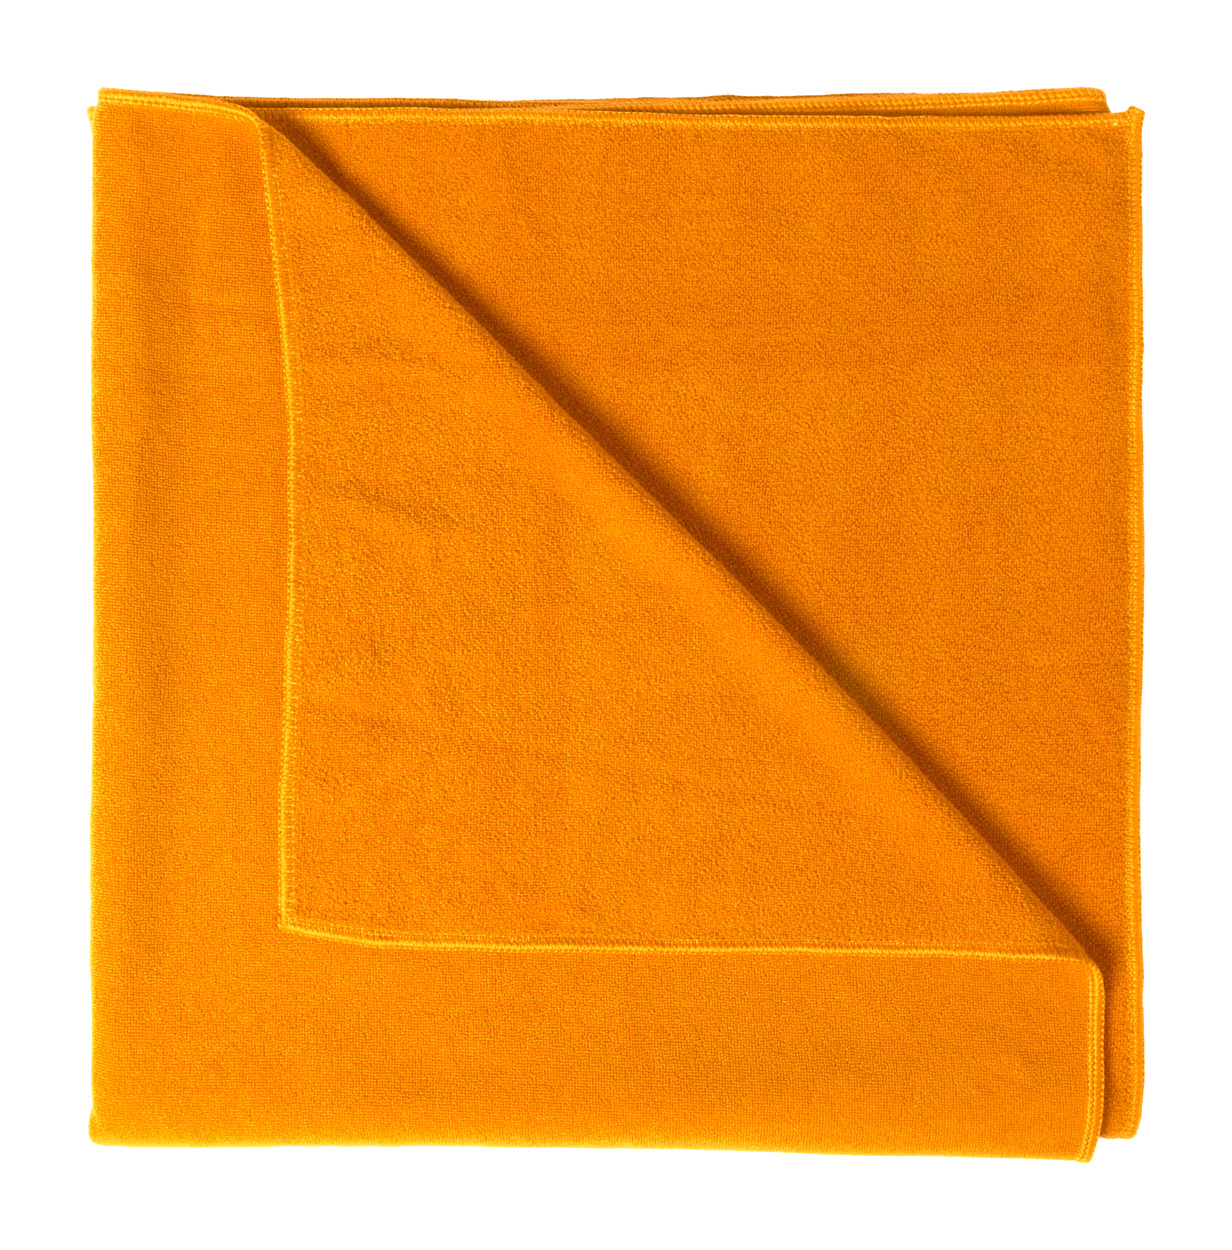 Lypso towel